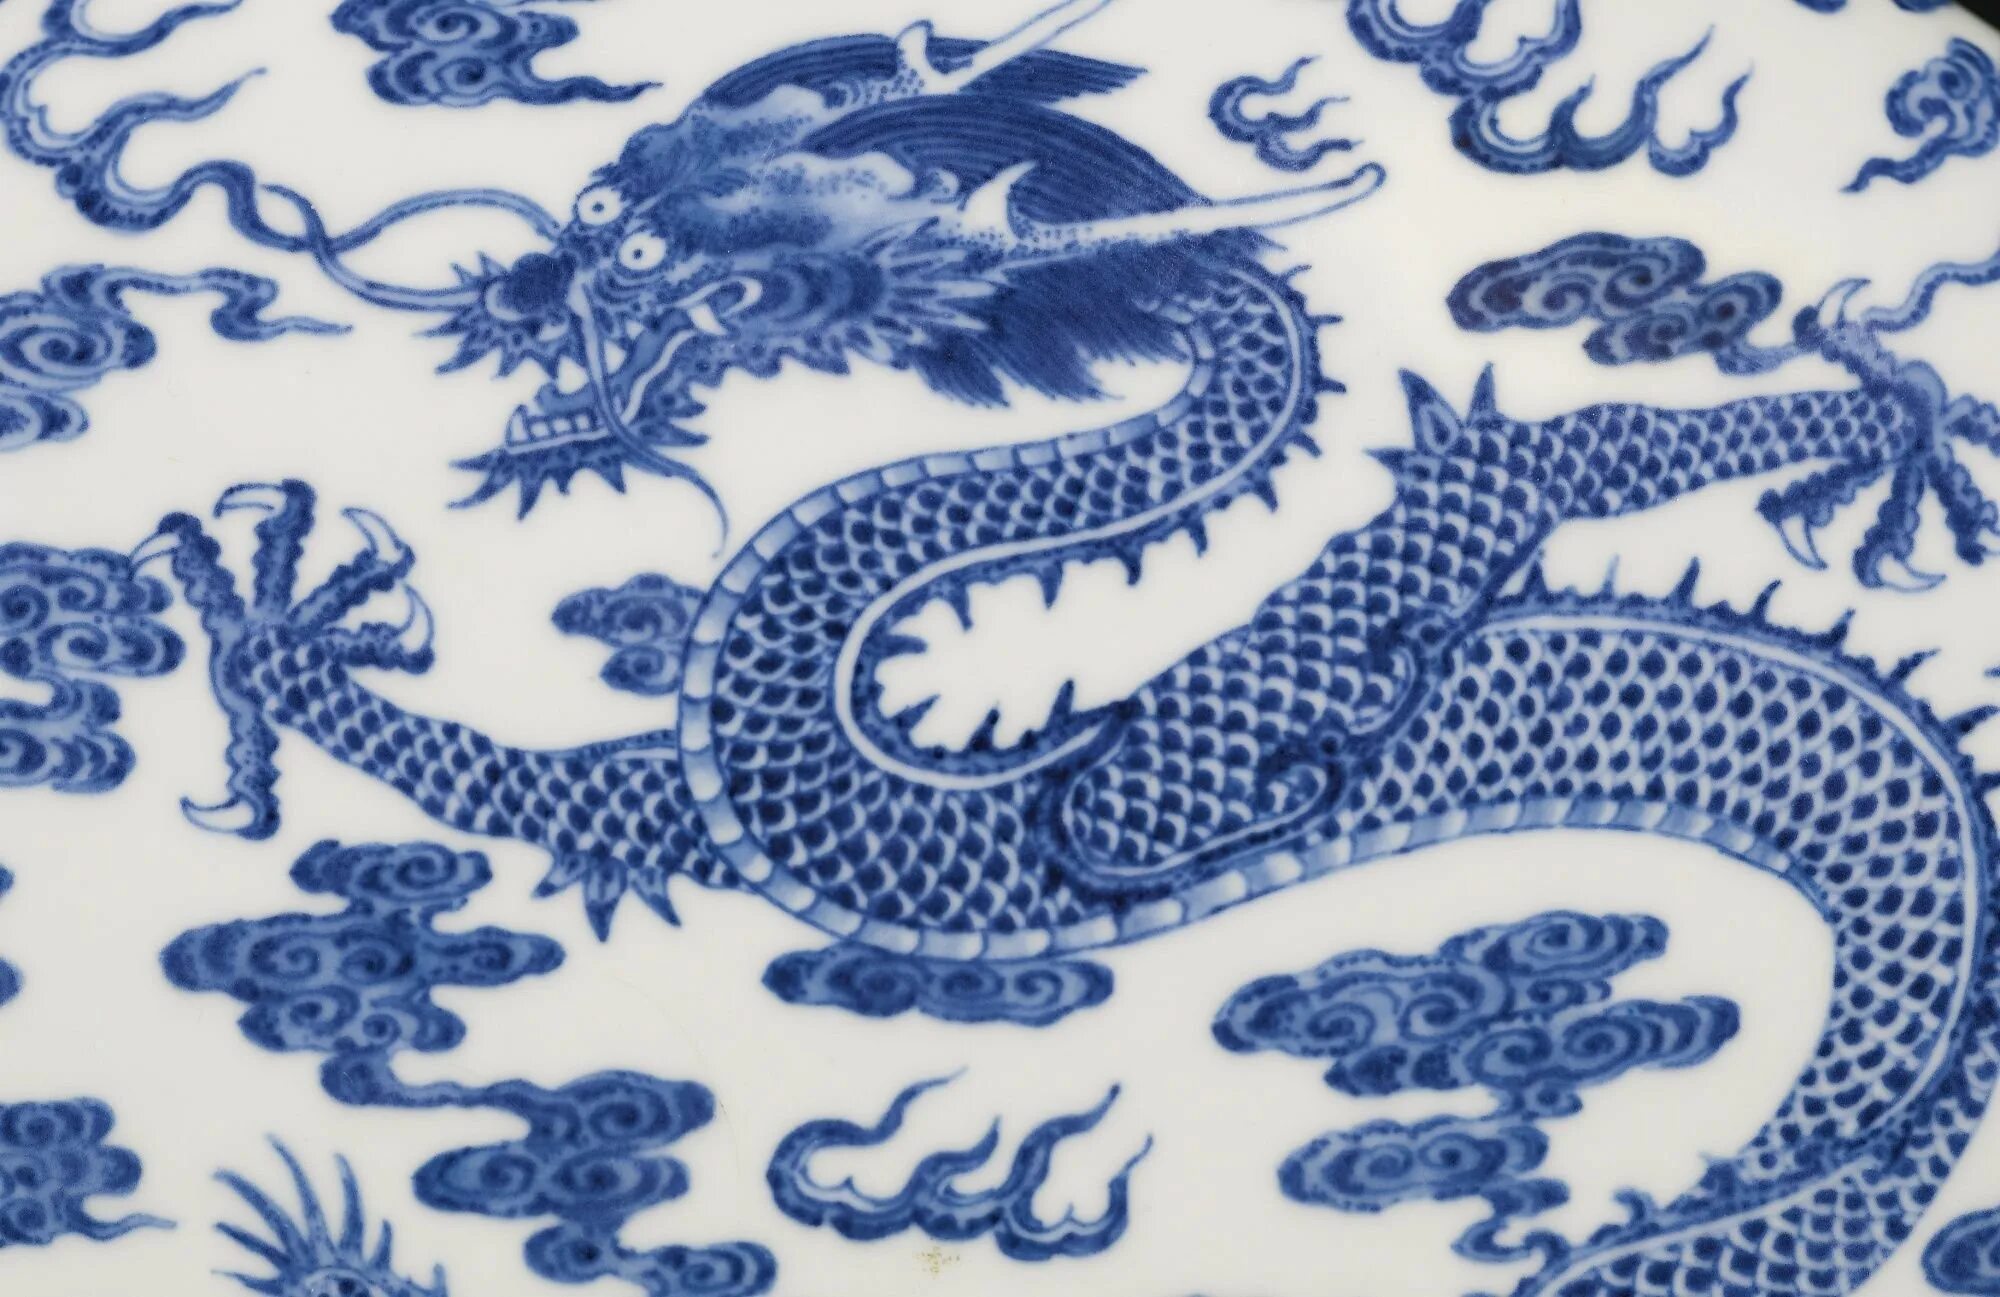 Будет китайско синий. Qing Dynasty Dragon. Китайский дракон династии Цин. Китайский зеленый дракон Цинлун. Китайский орнамент чешуя.